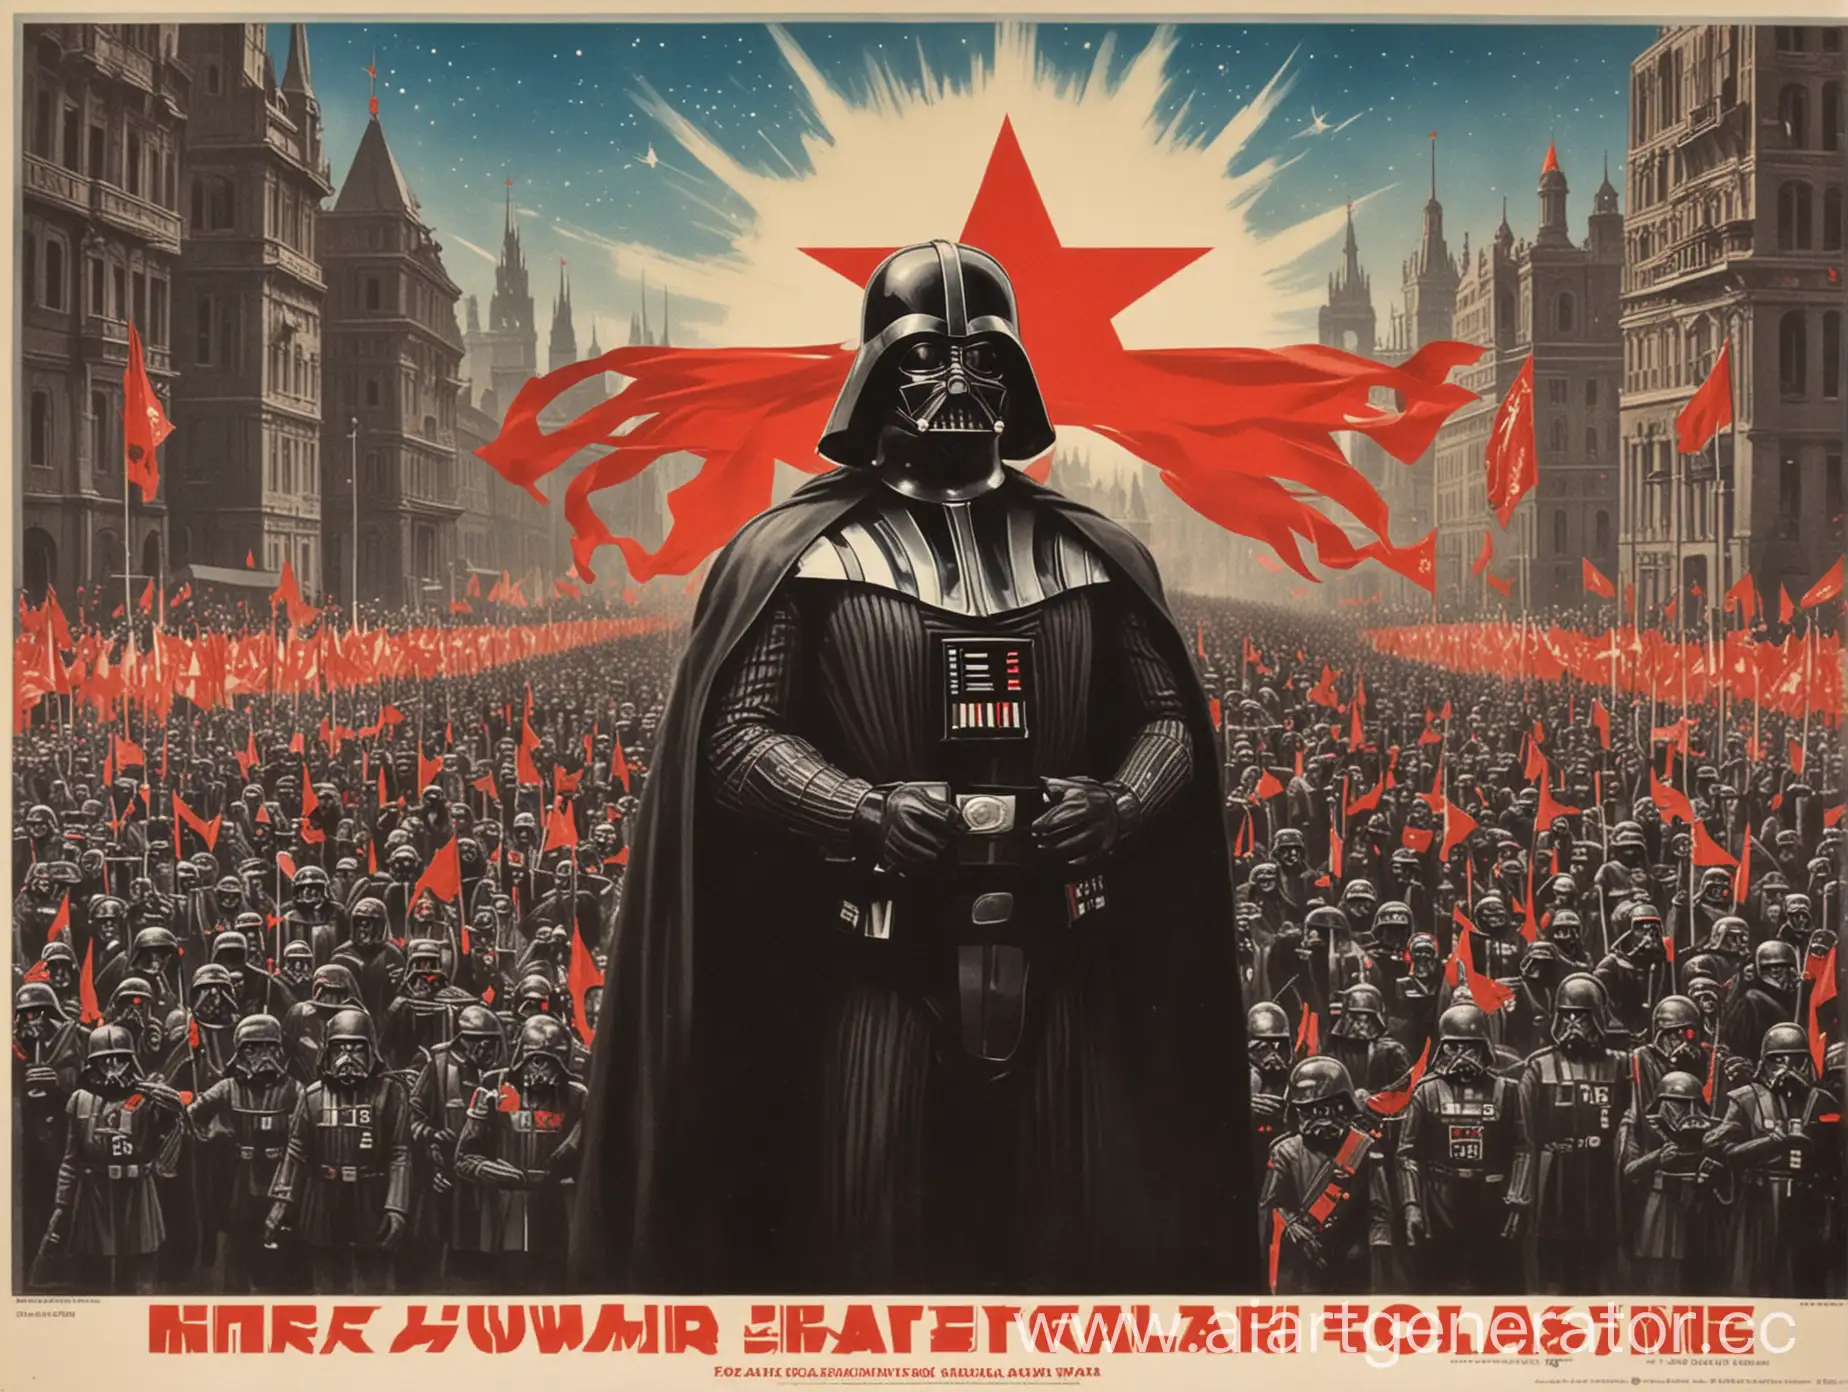 Darth Vader star wars парад СССР 1 мая советский плакат мир труд май

